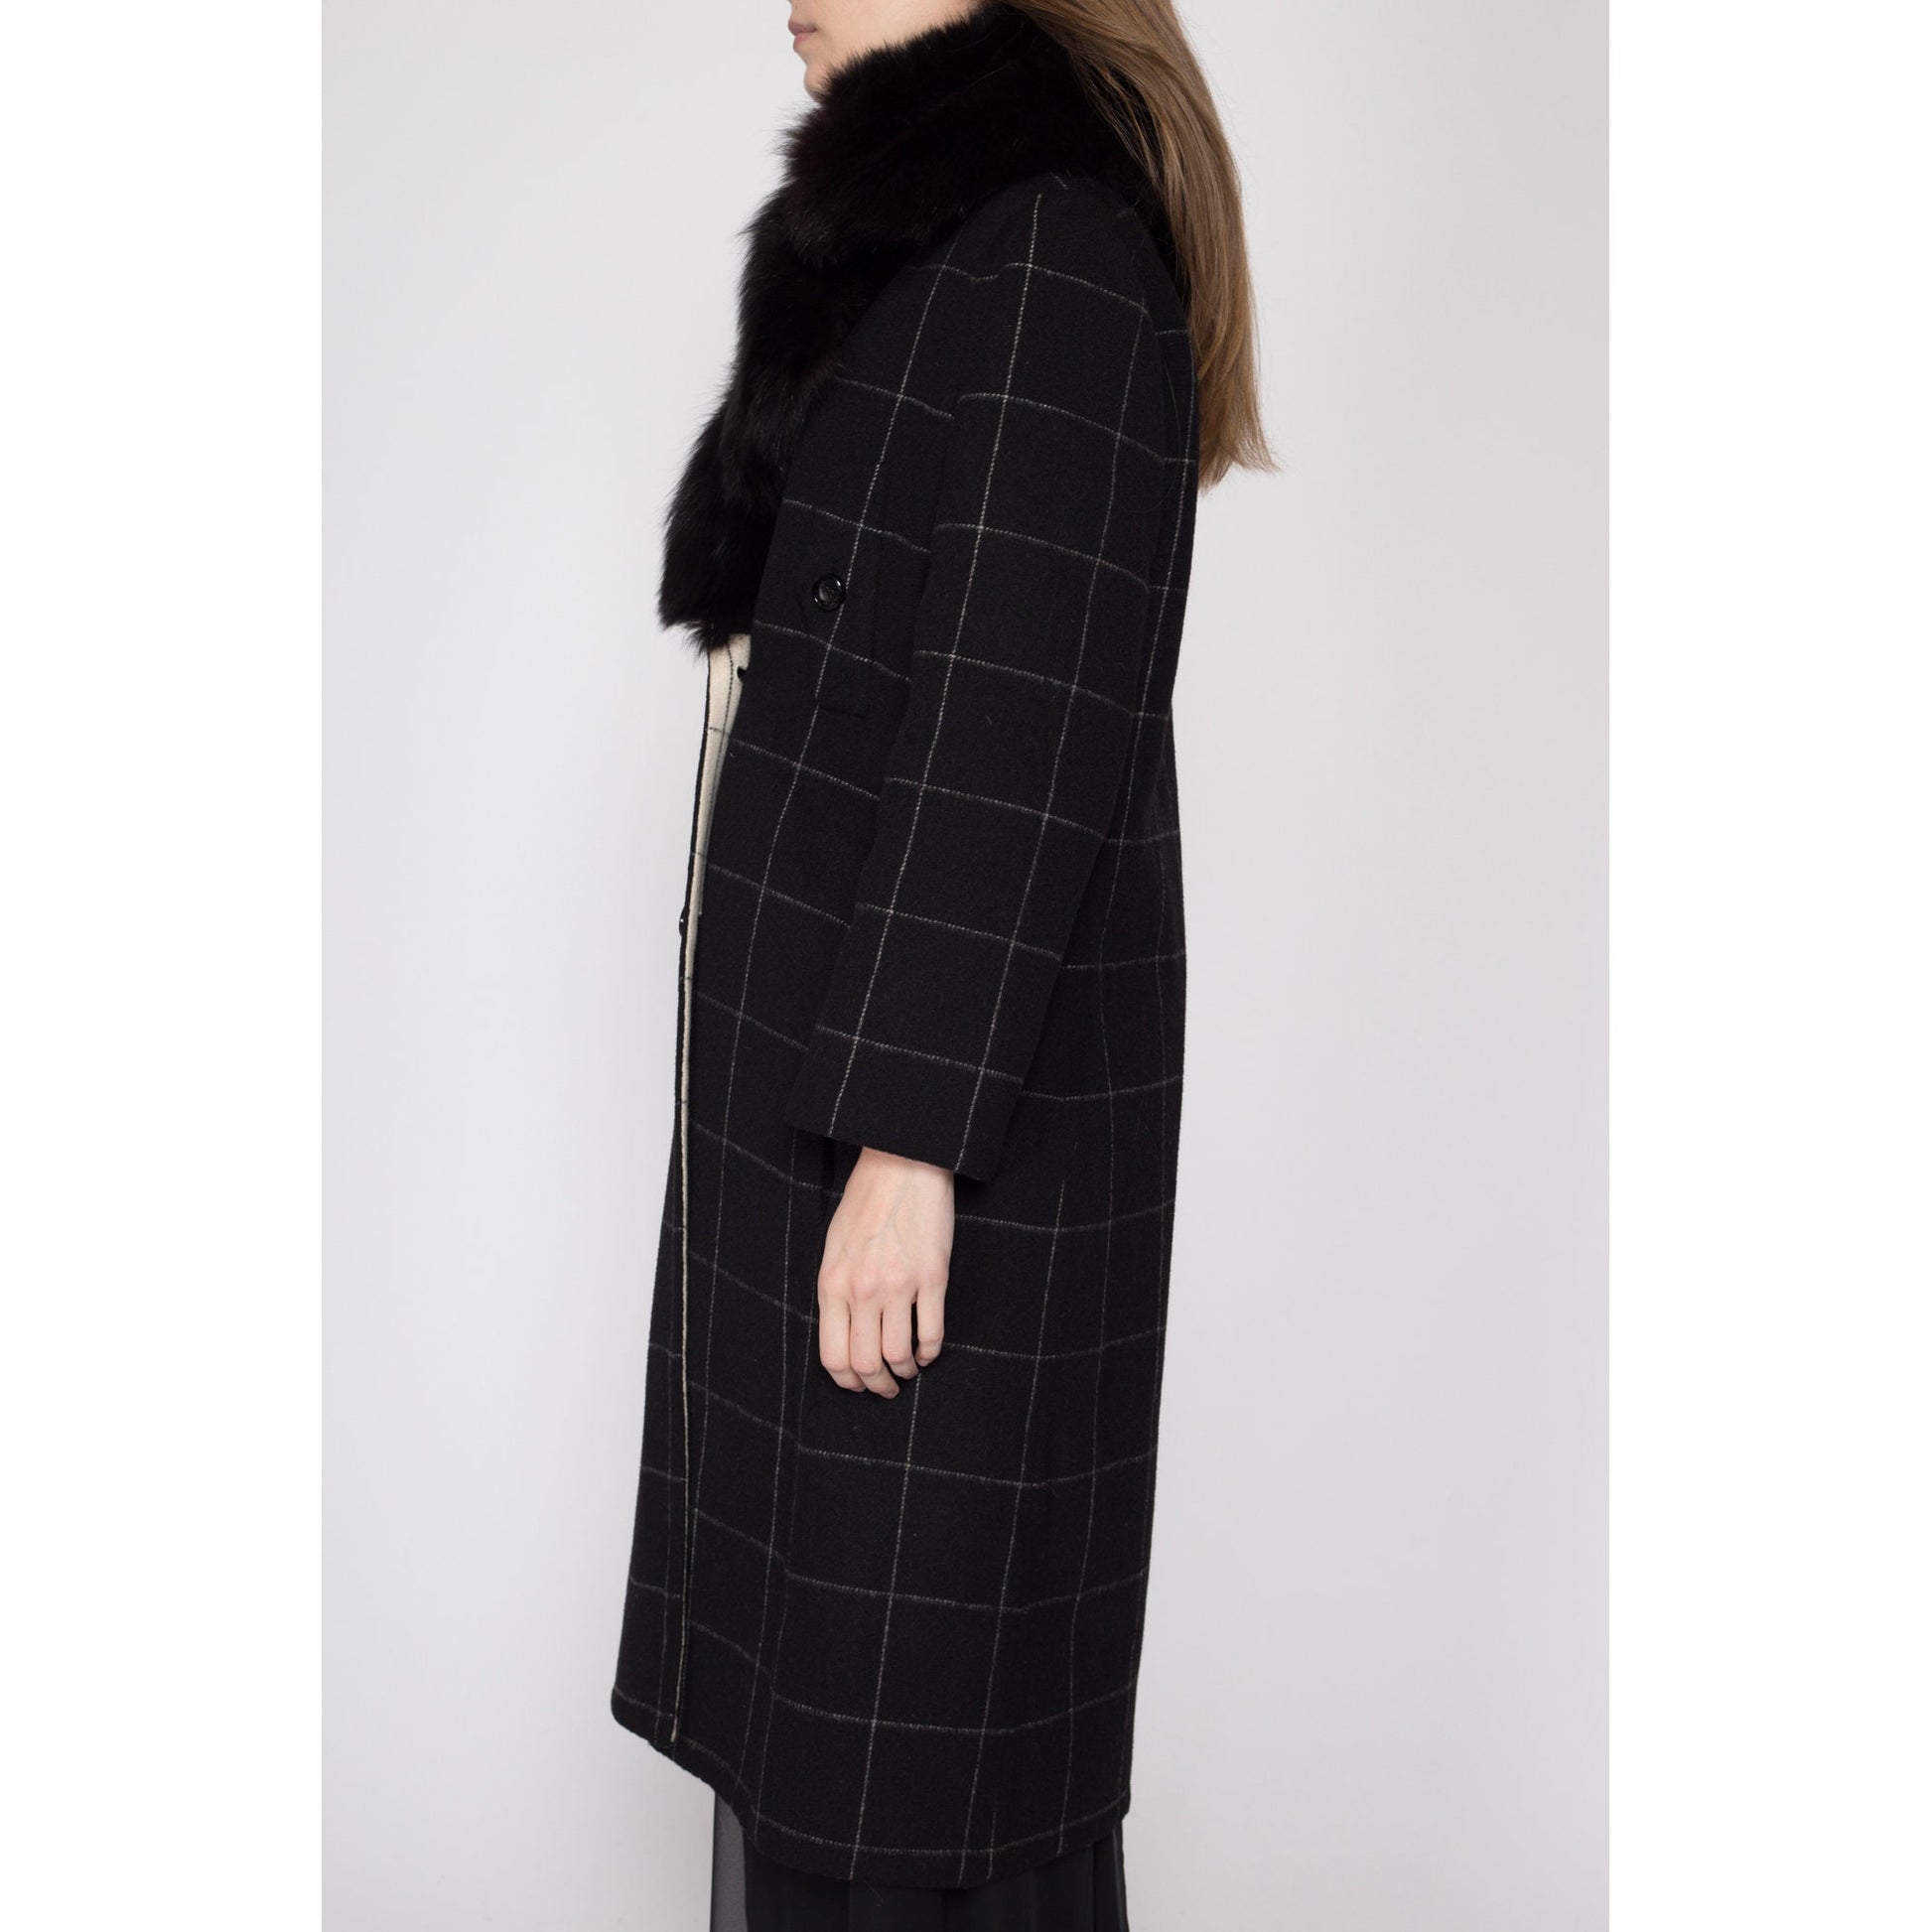 Sm-Med 70s Galanos Designer Wool Fur Collar Overcoat | Vintage Grid Pattern Double Breasted Winter Blanket Jacket